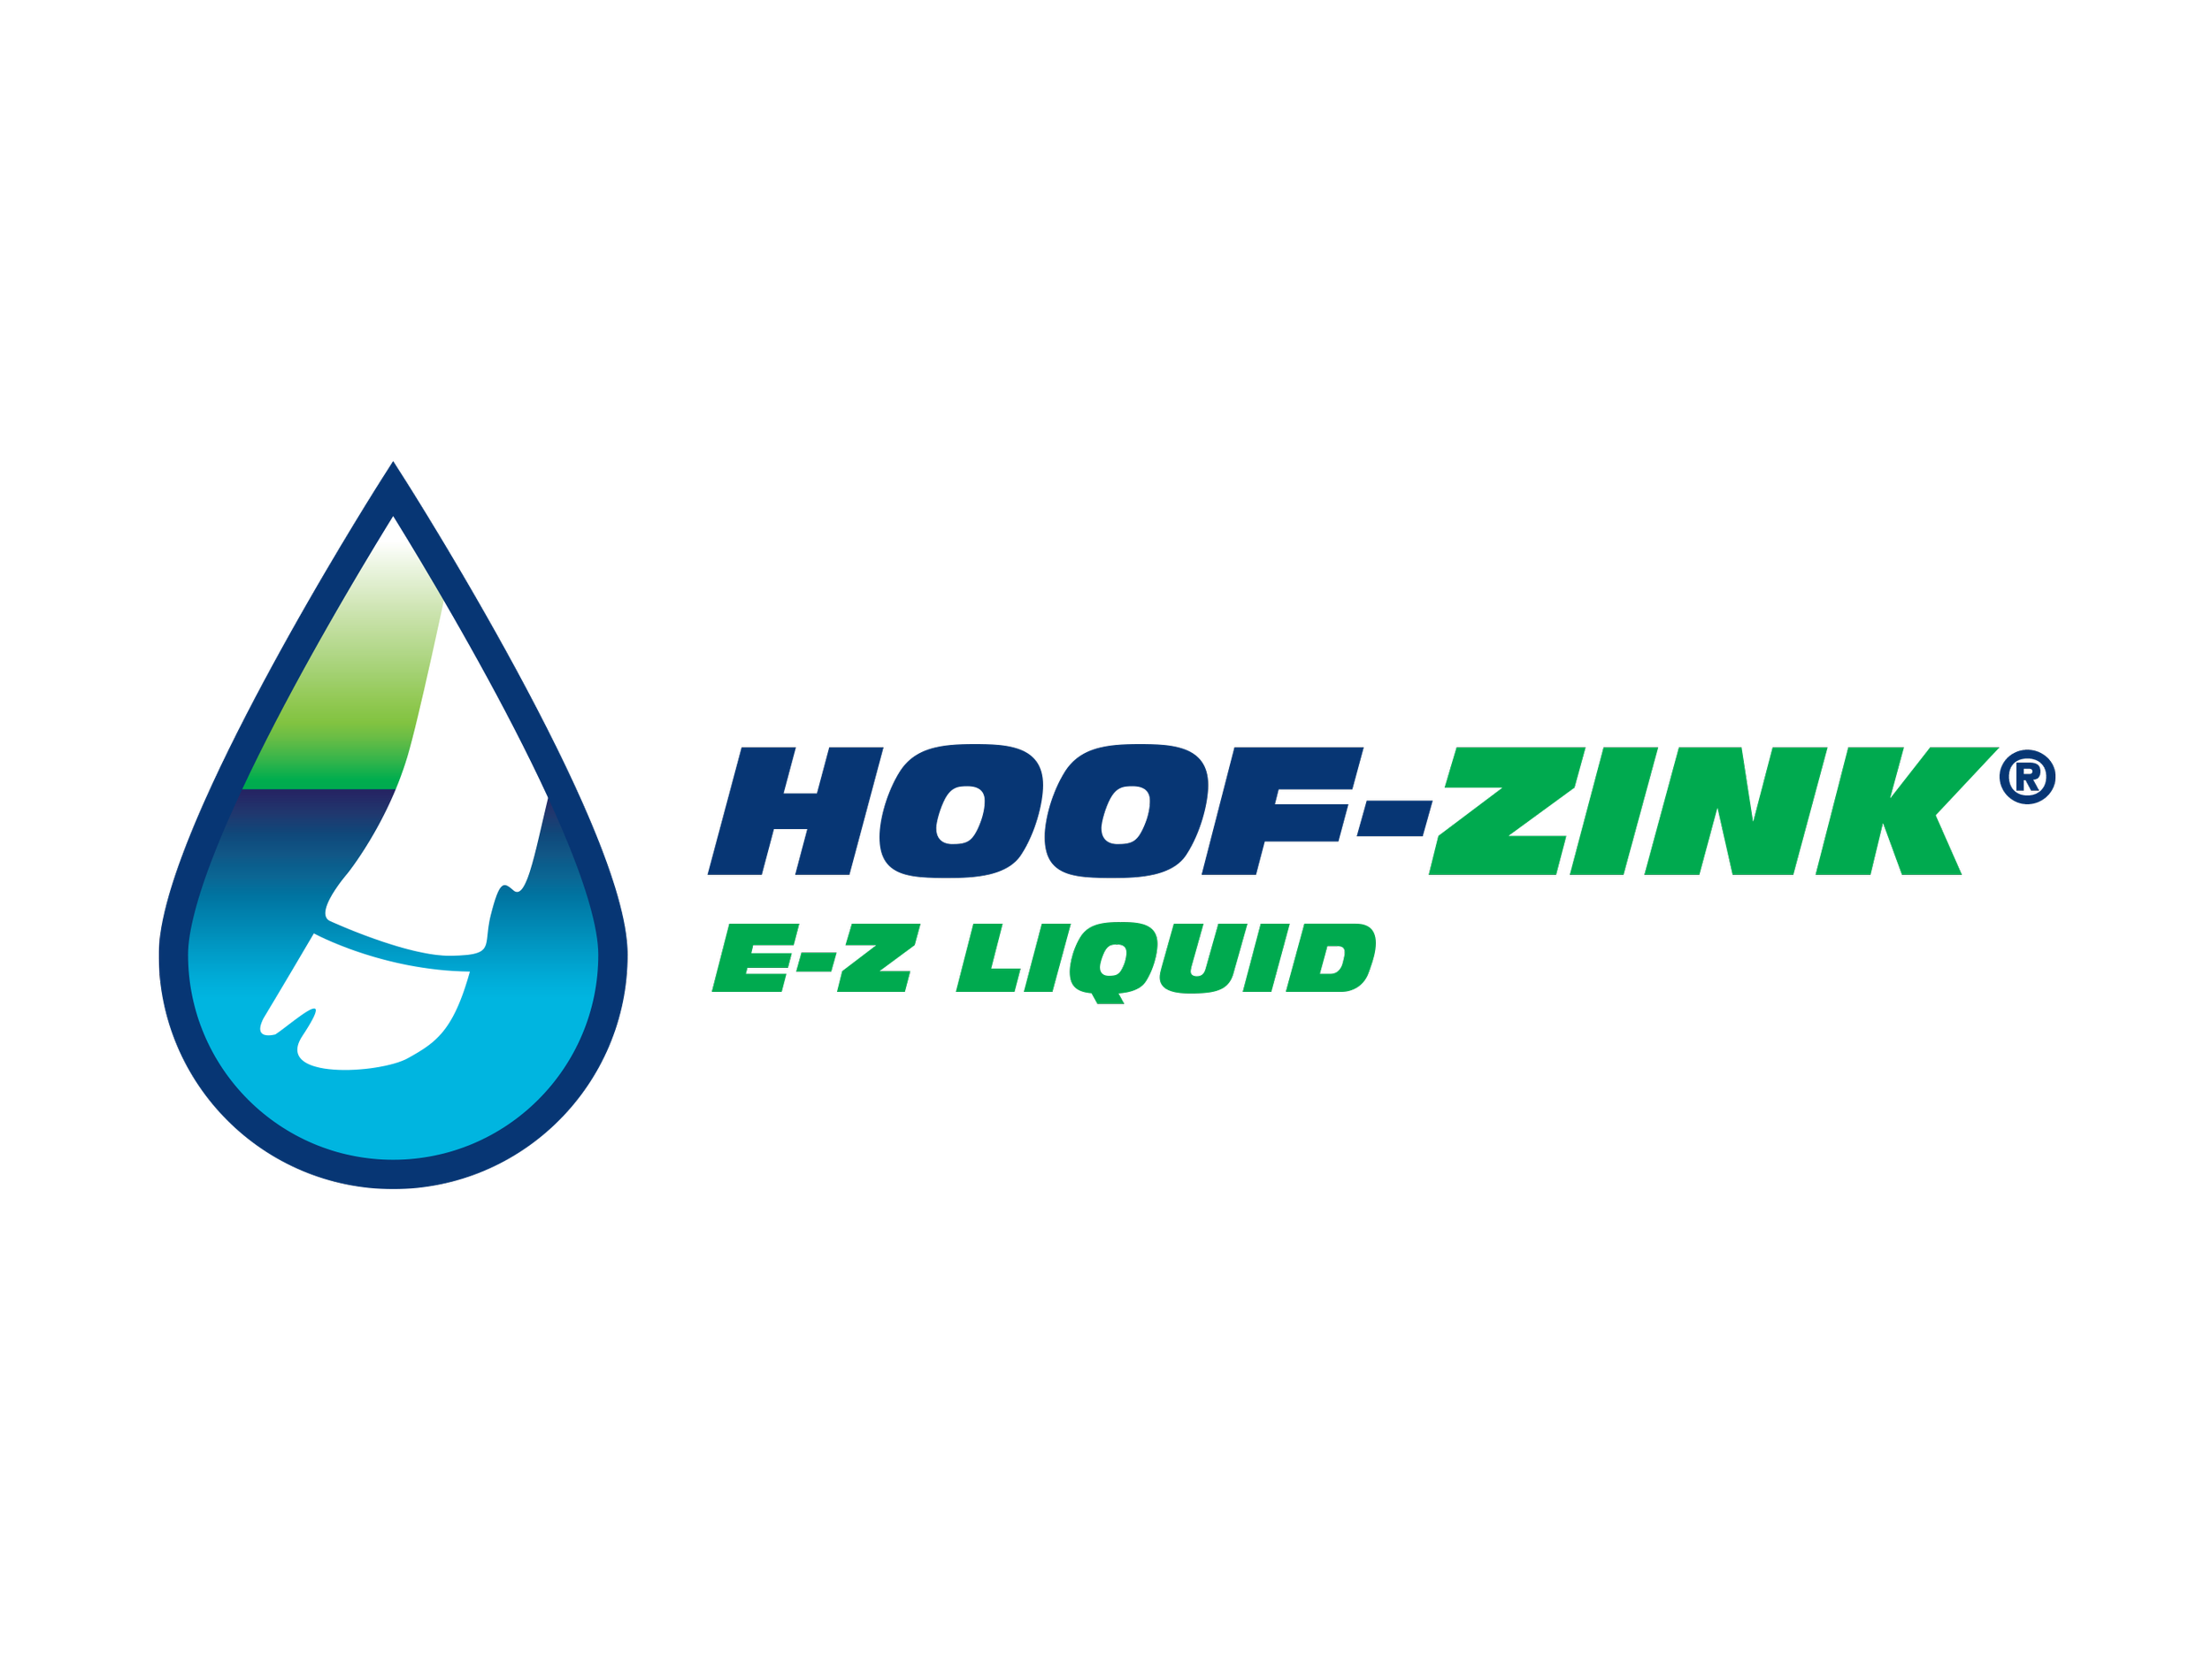 Hoof-Zink E-Z Liquid Logo.png